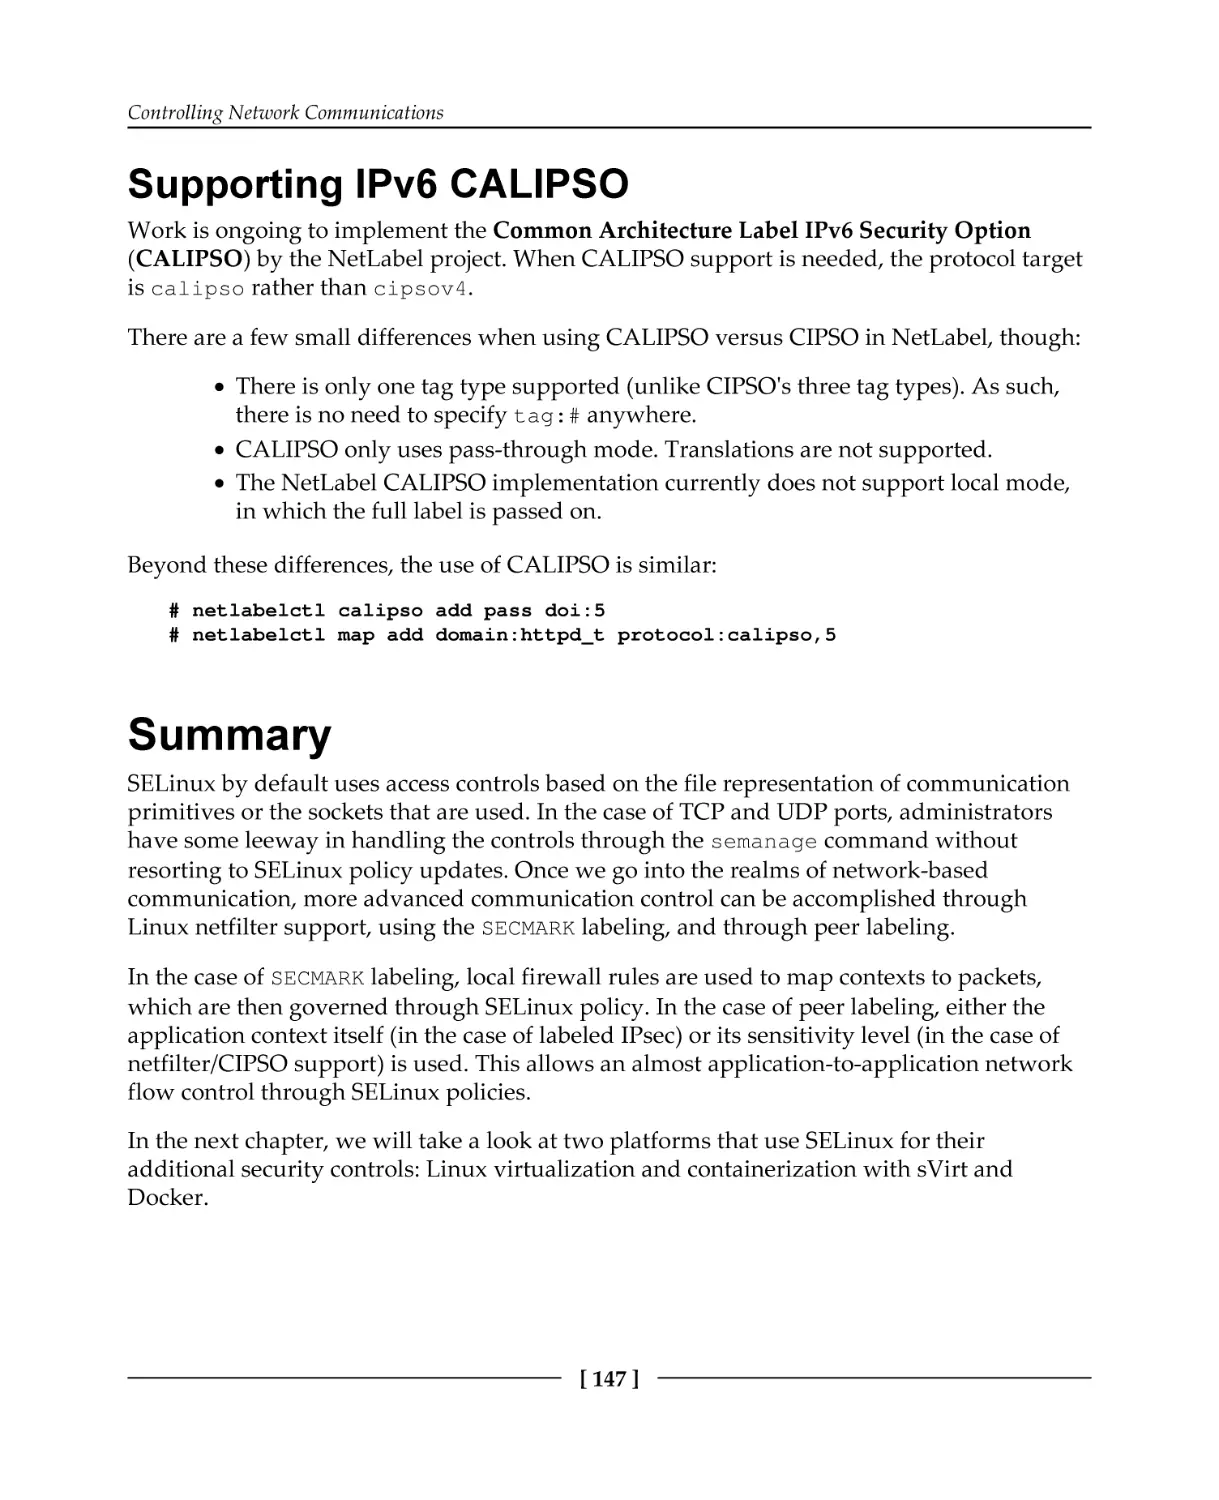 Supporting IPv6 CALIPSO
Summary